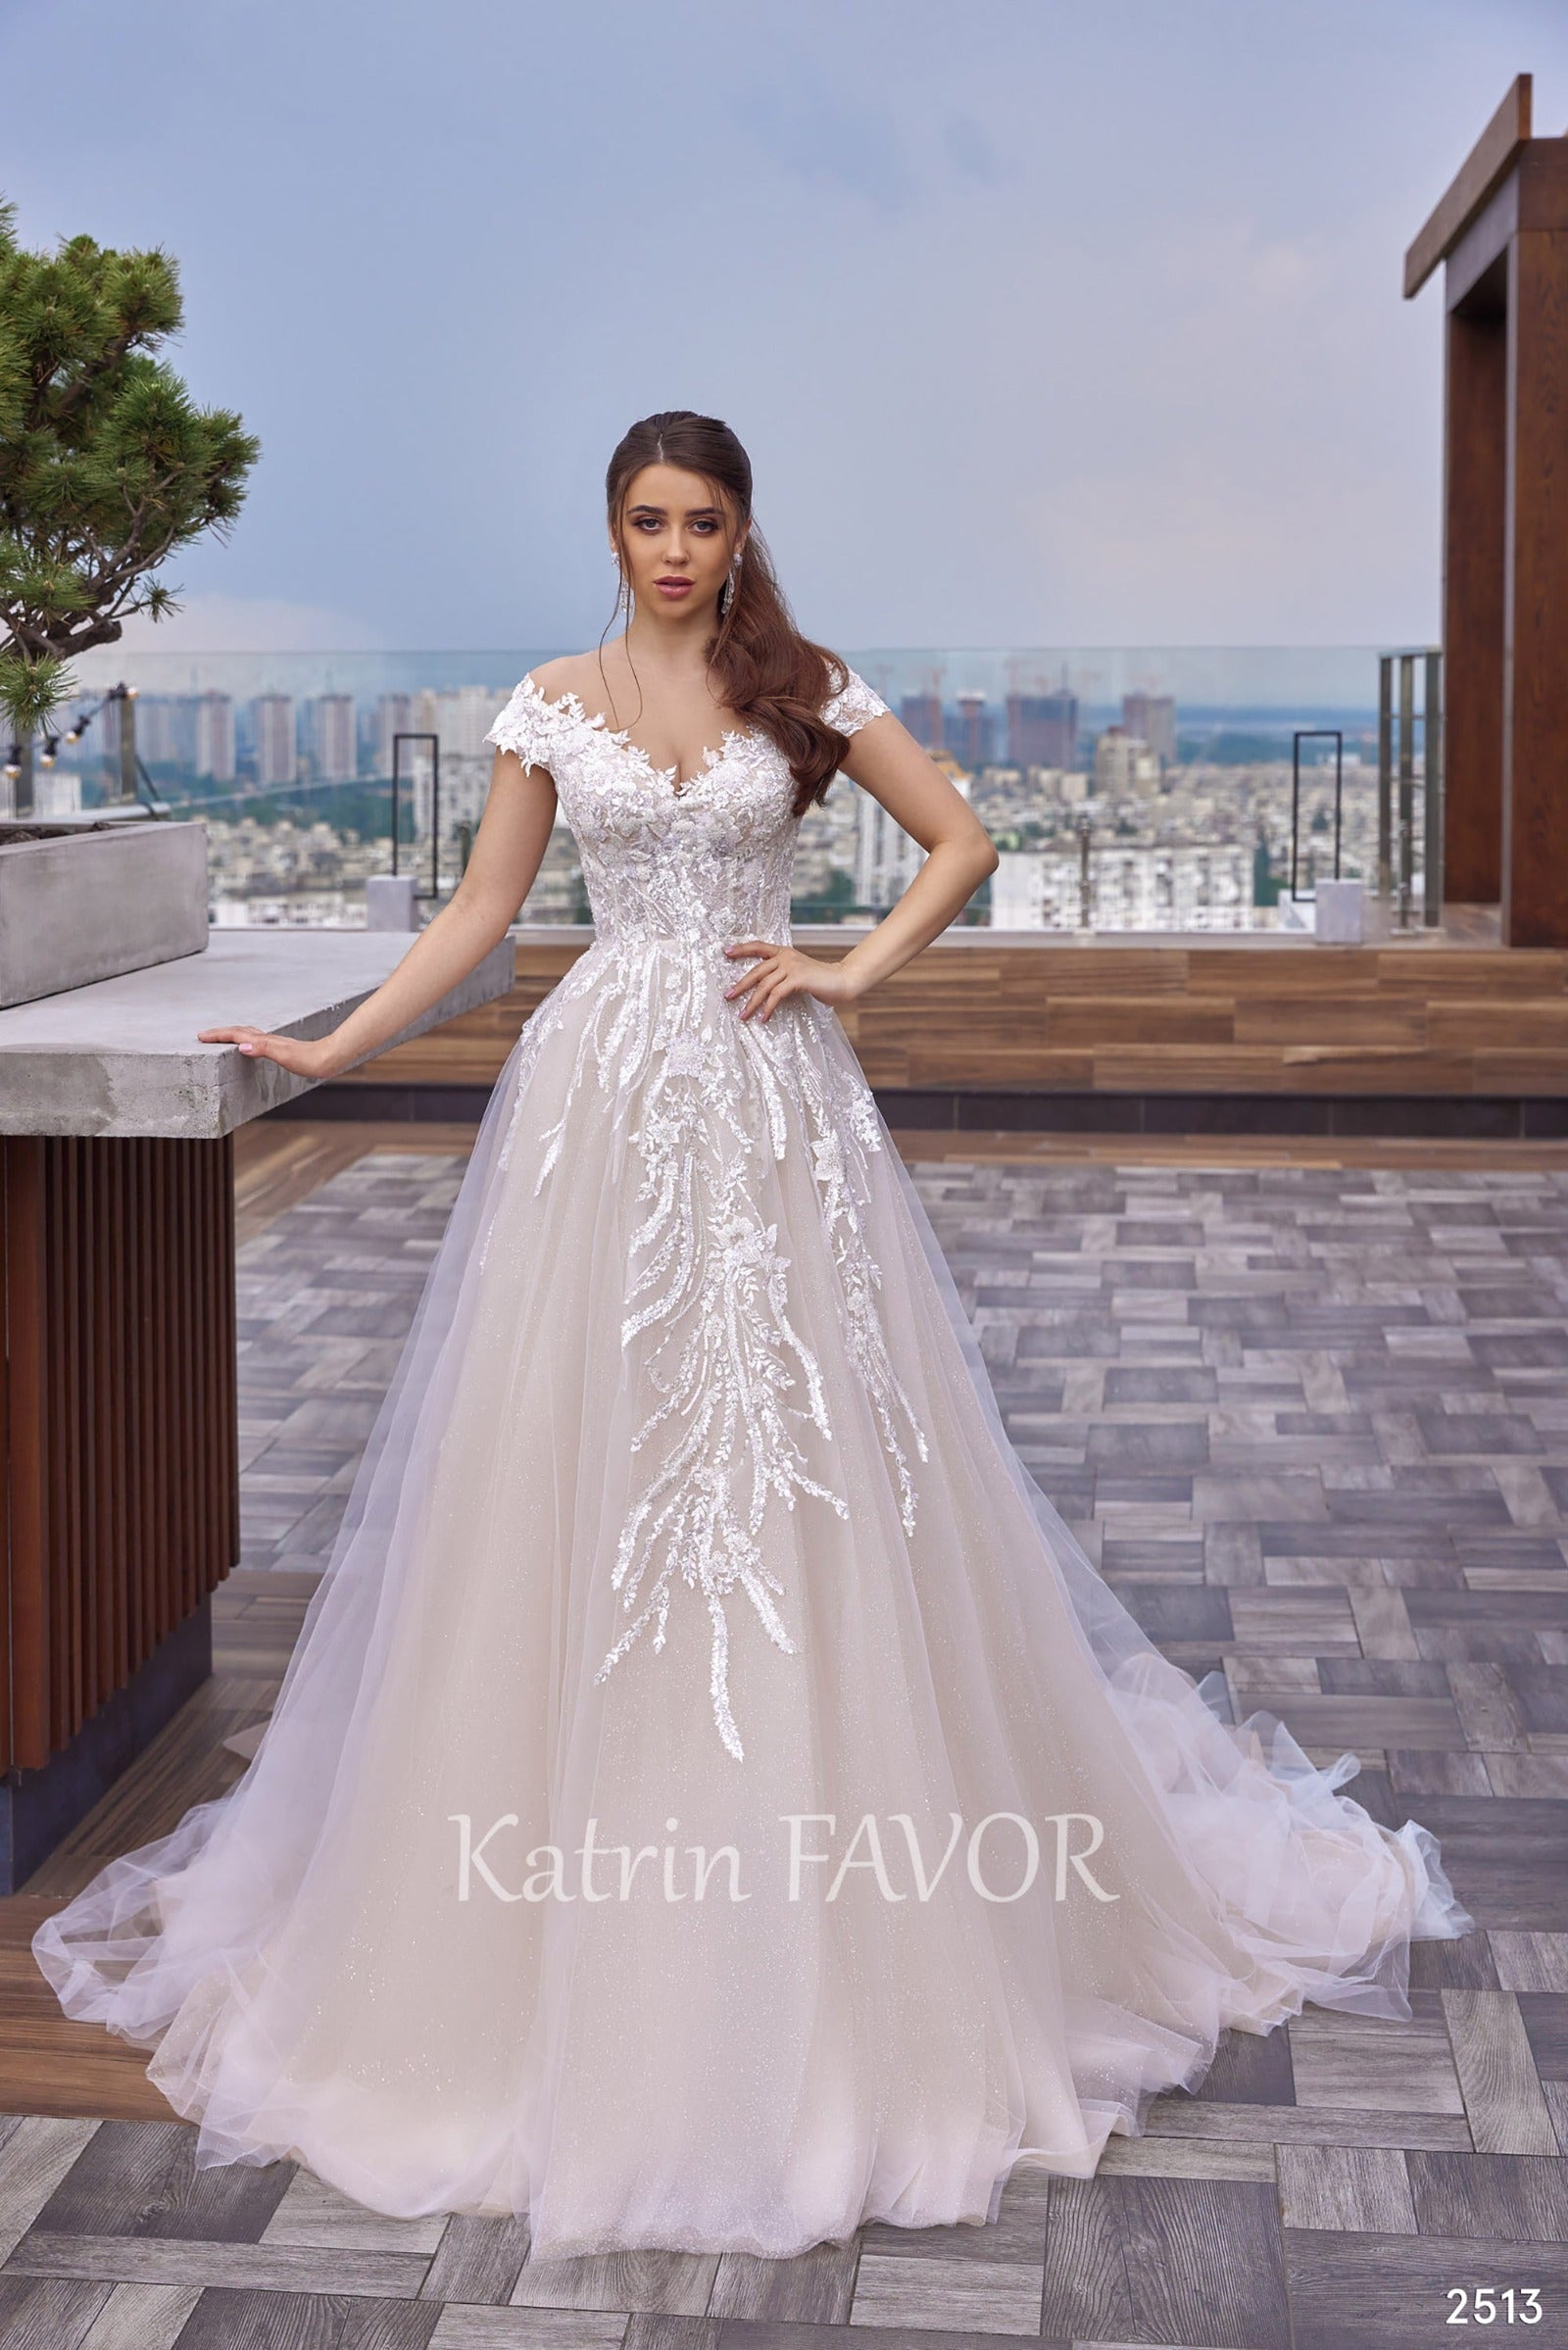 KatrinFAVORboutique-Blush embroidered rustic wedding dress